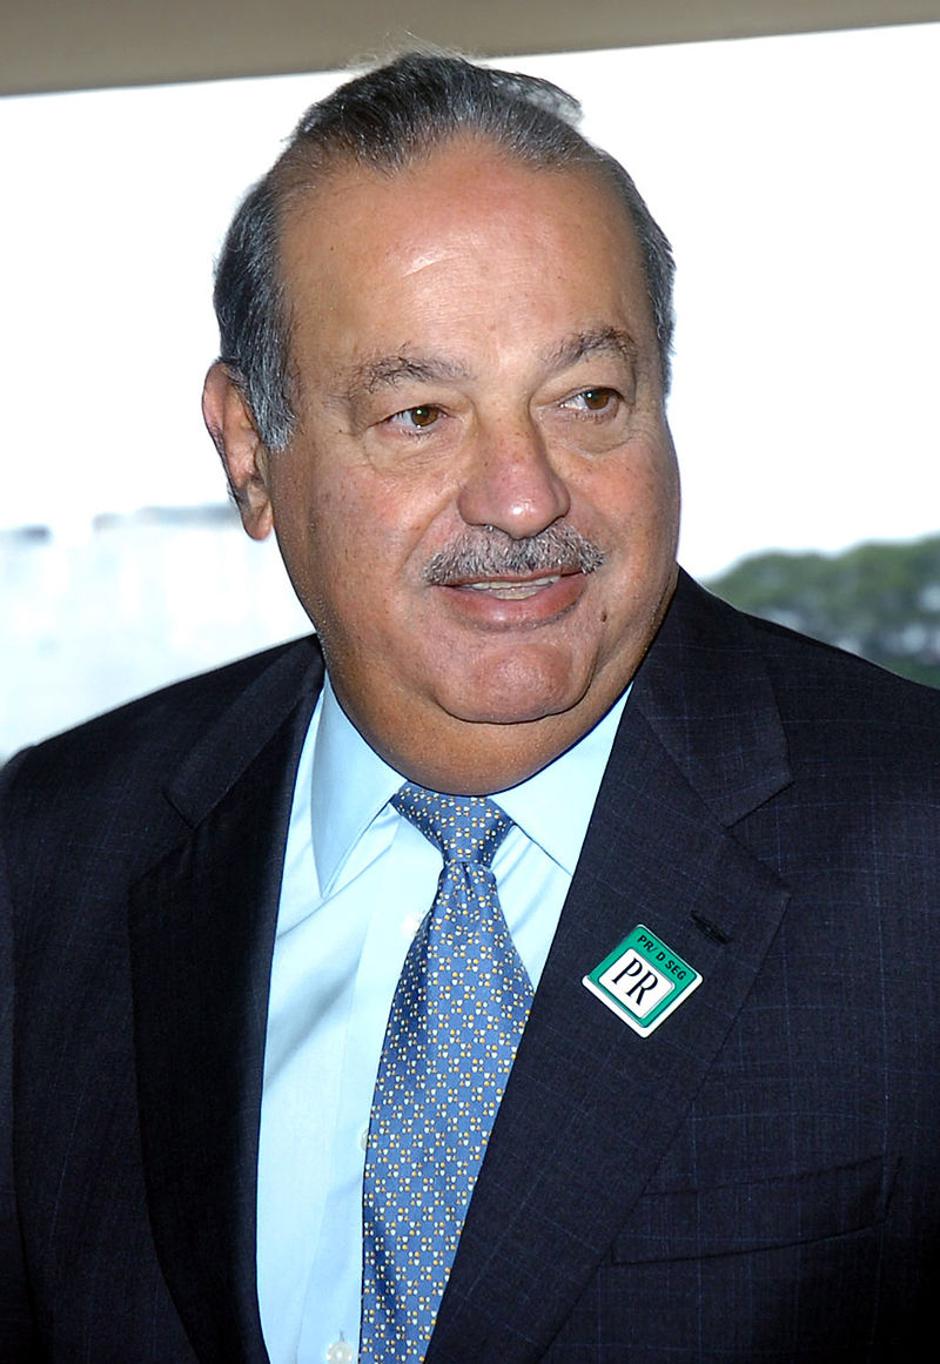 Carlos Slim Helu | Author: Wikipedai/CC BY 3.0 br